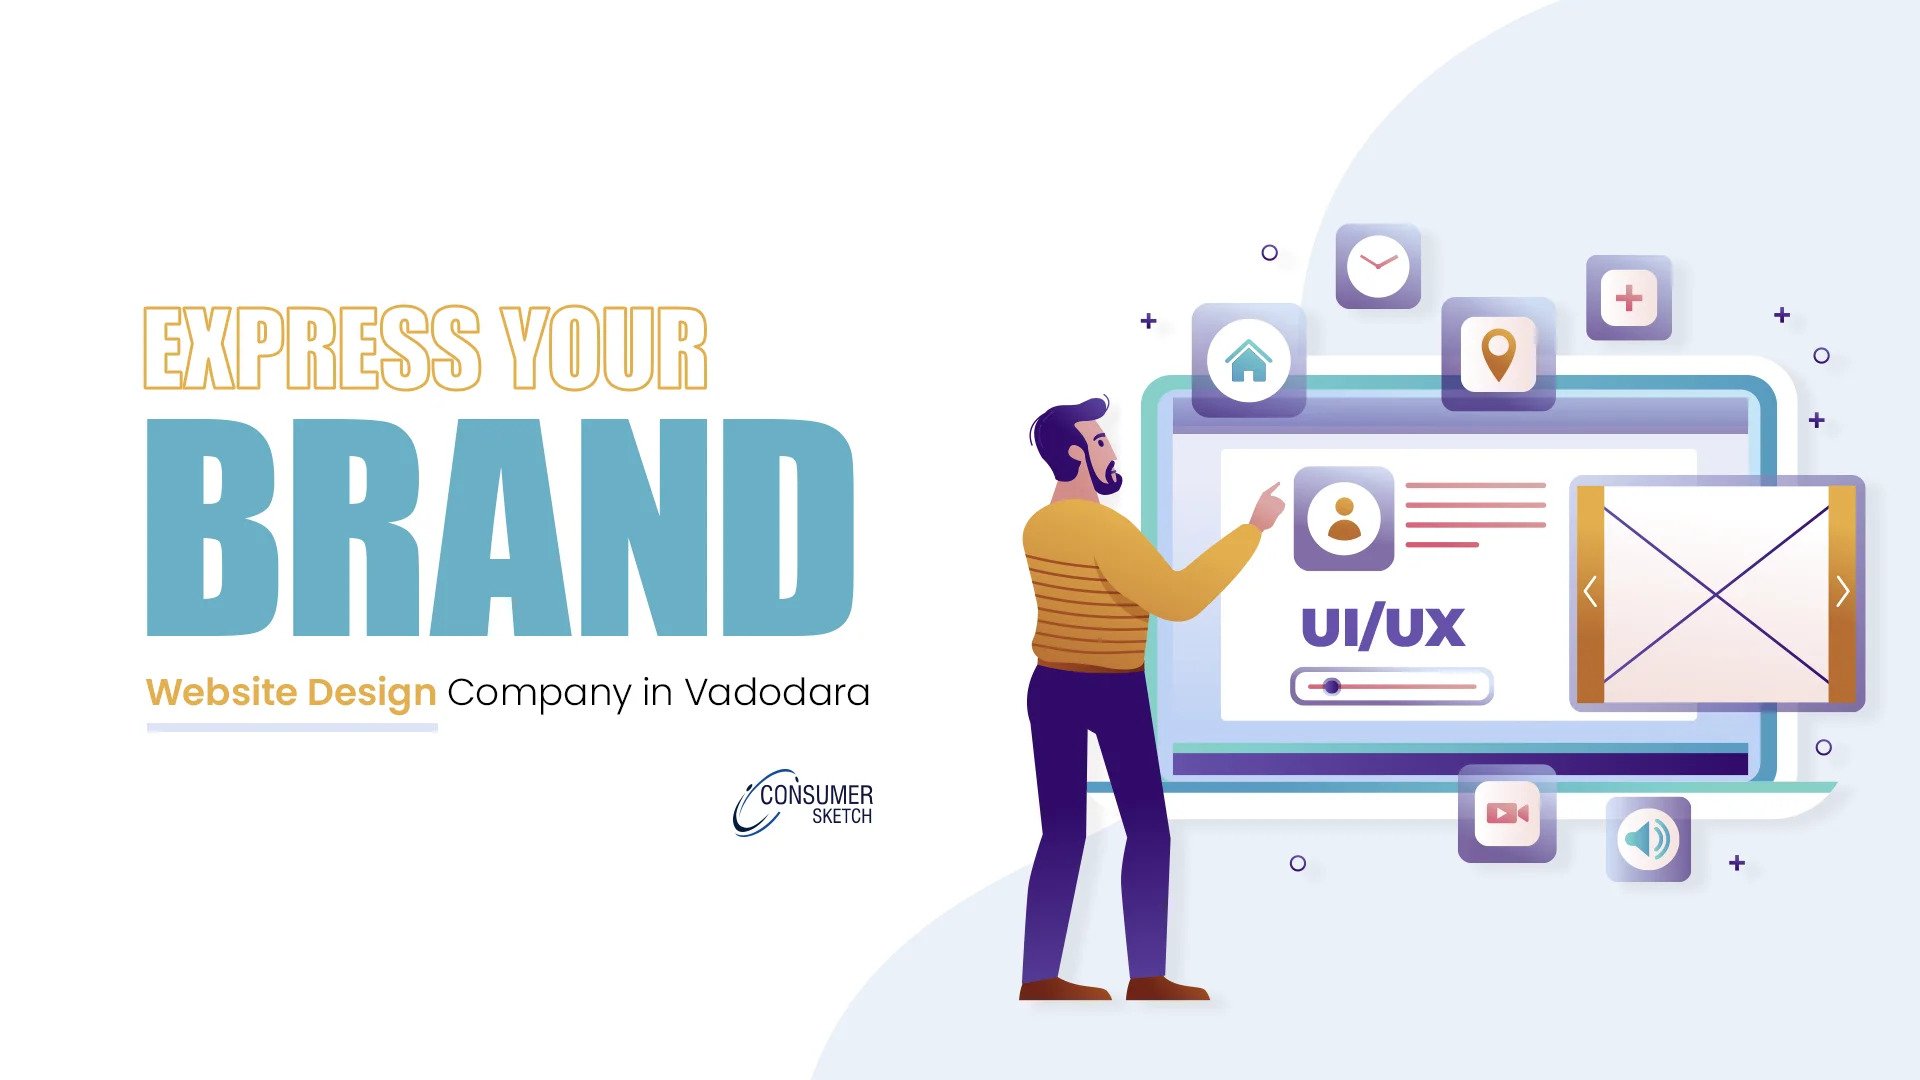 Express Your Brand: Website Design Company in Vadodara